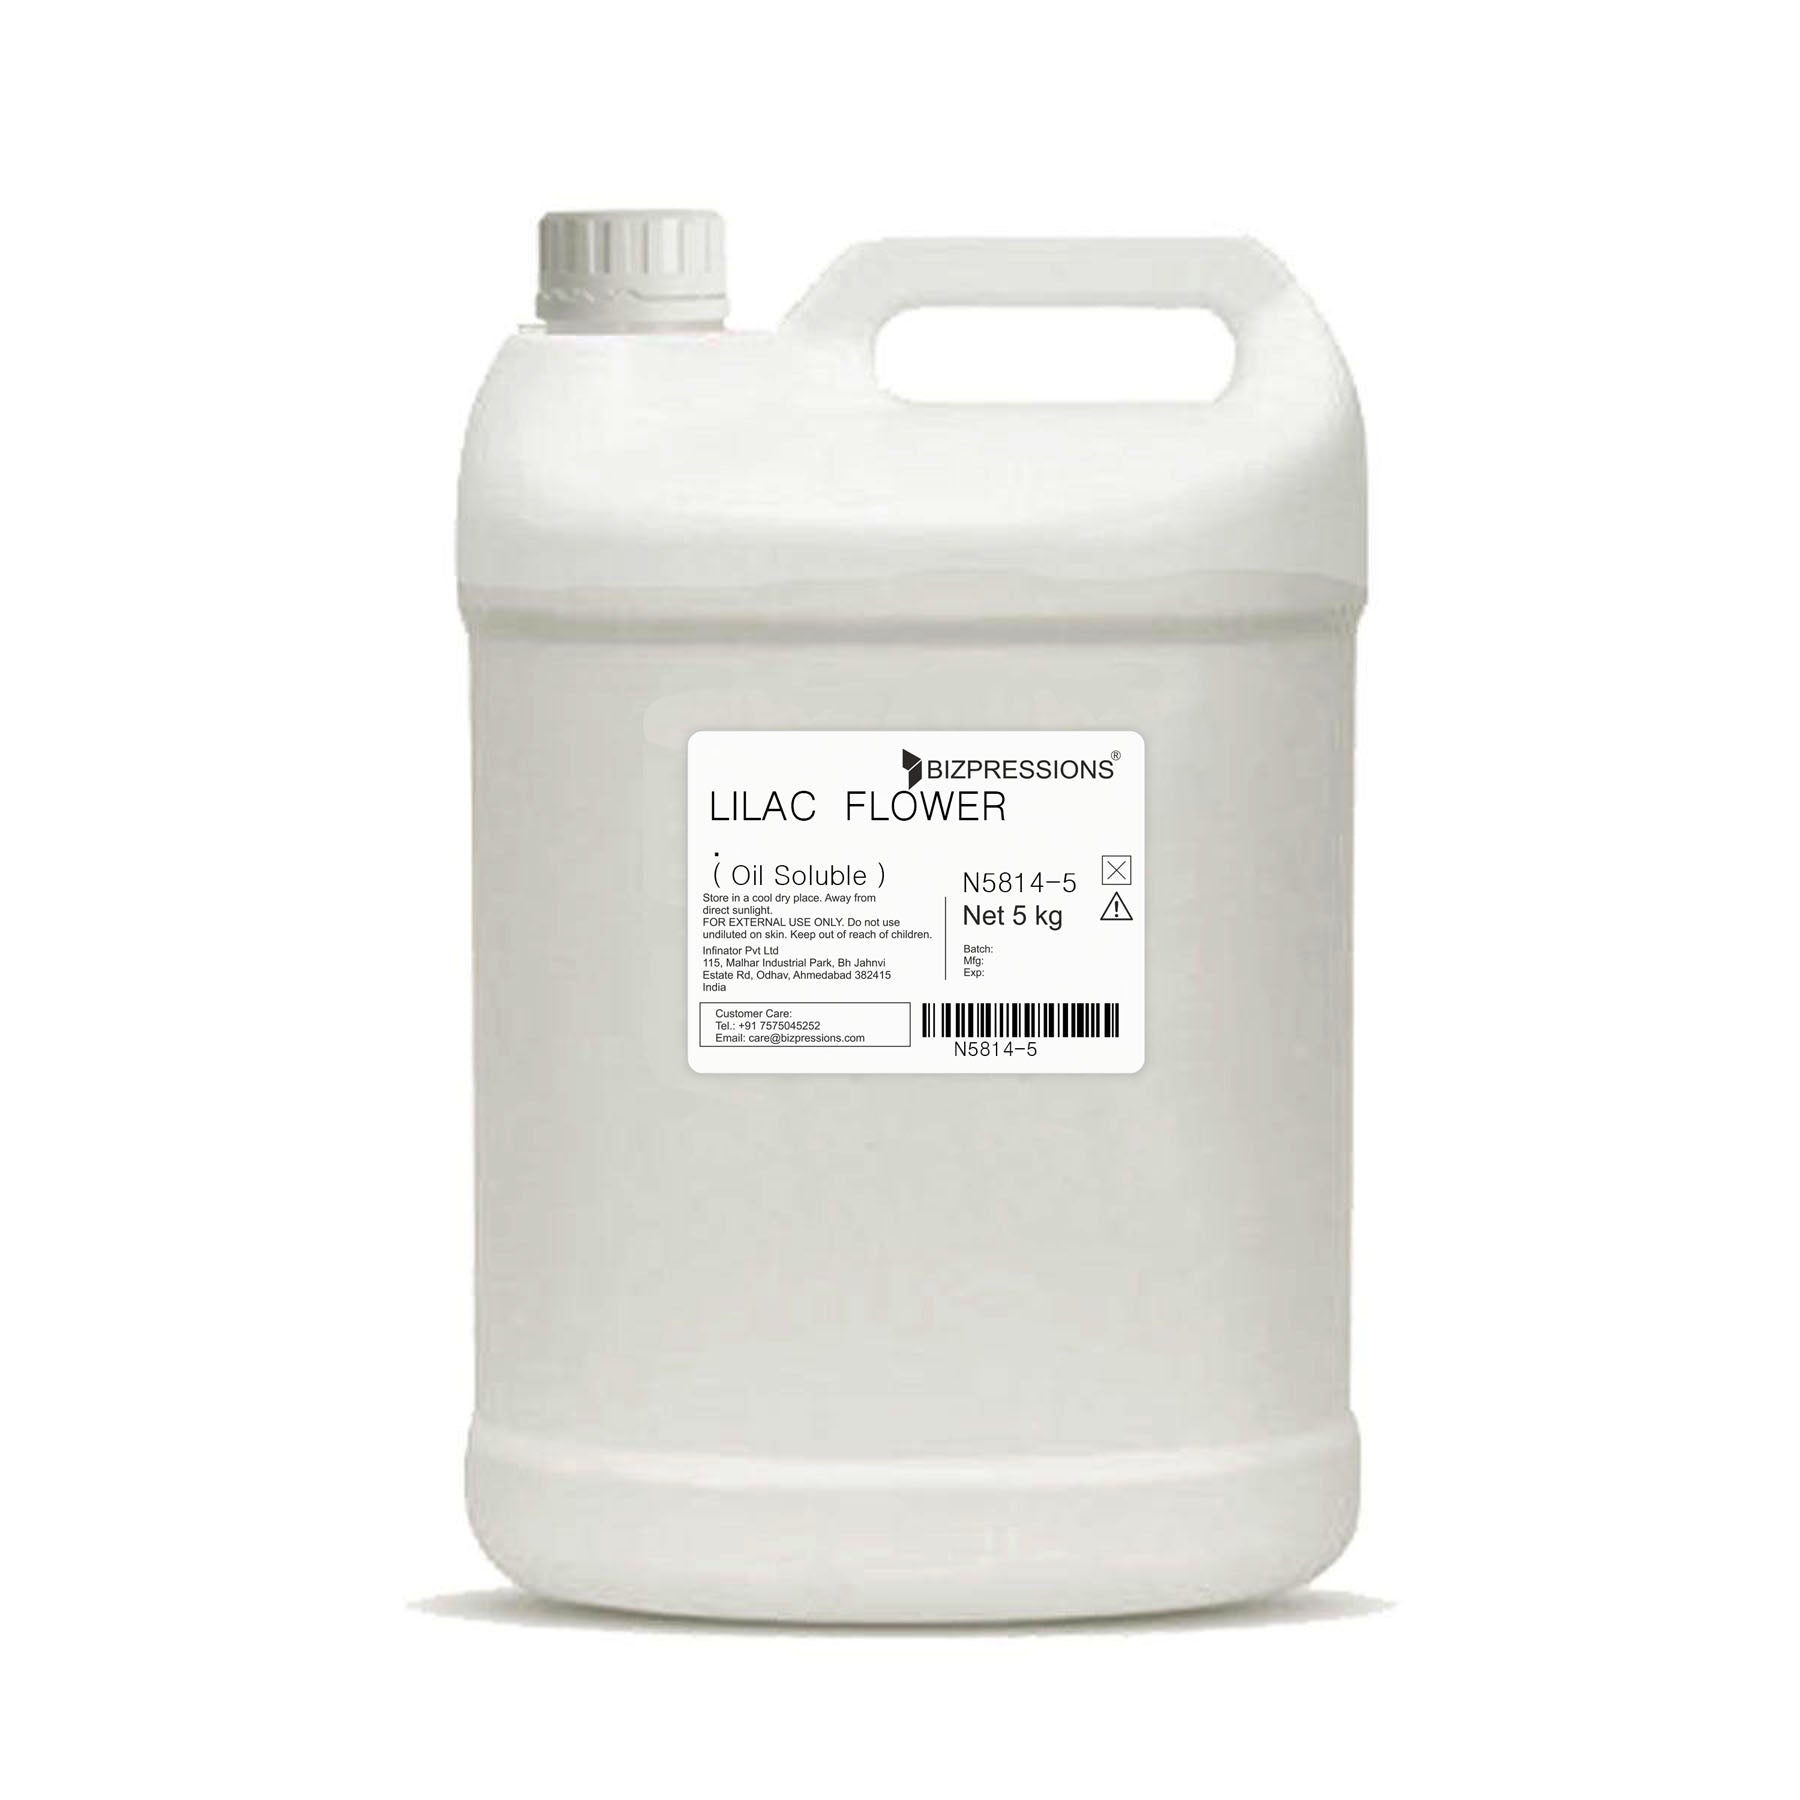 LILAC FLOWER - Fragrance ( Oil Soluble ) - 5 kg